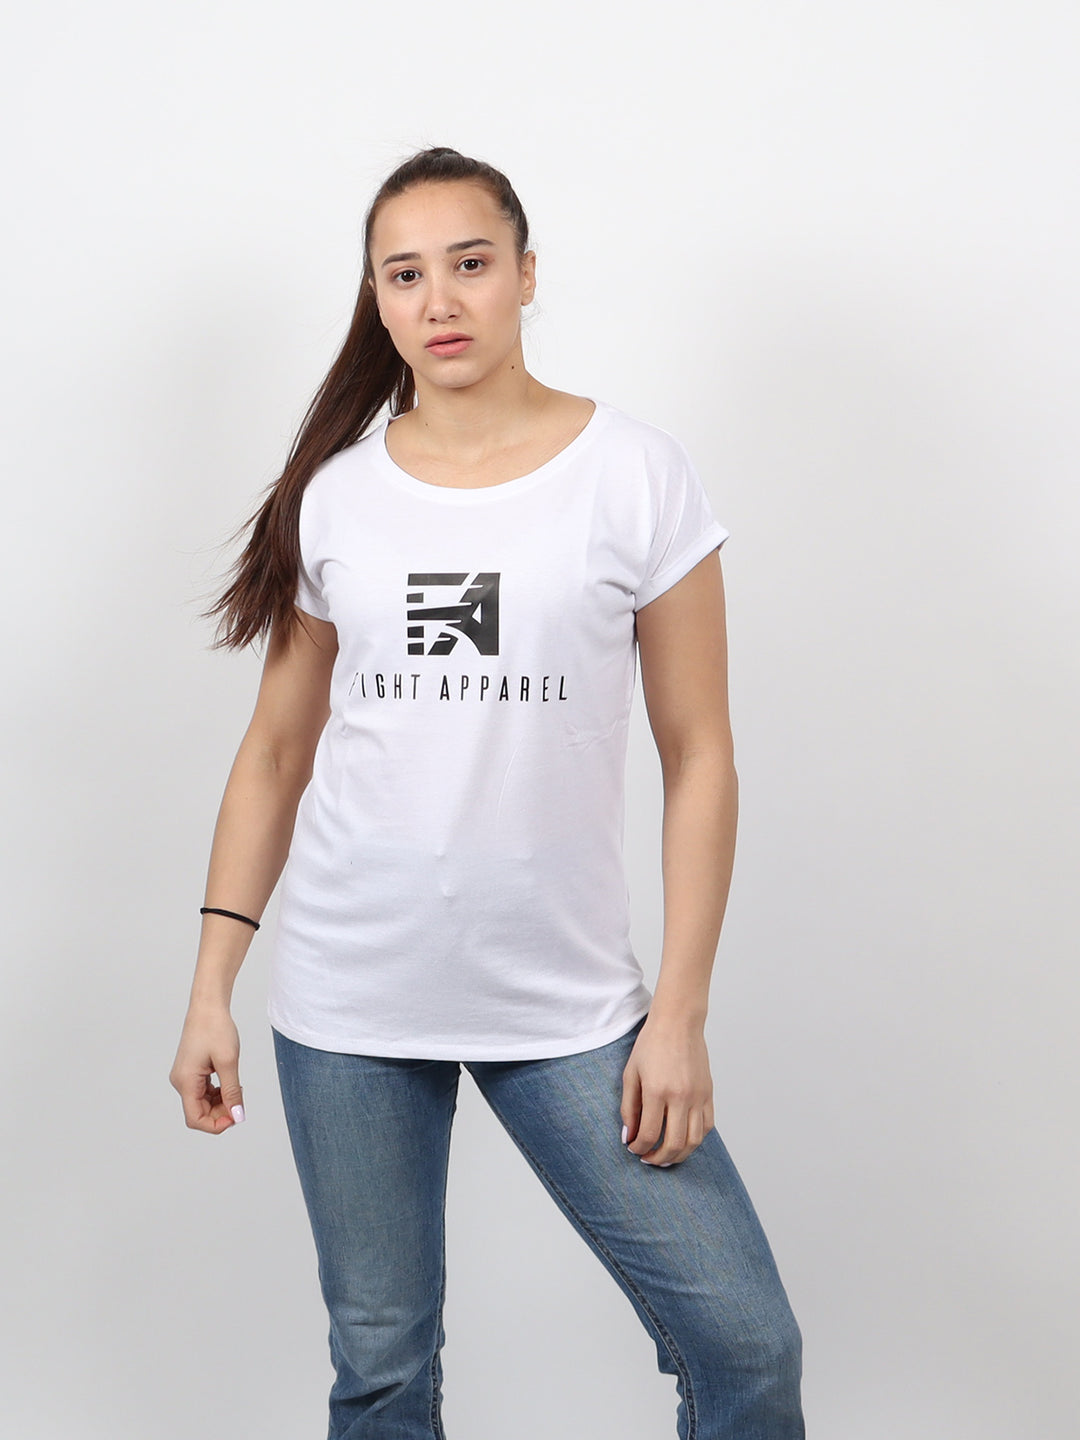 Lifestyle T-Shirt - Women